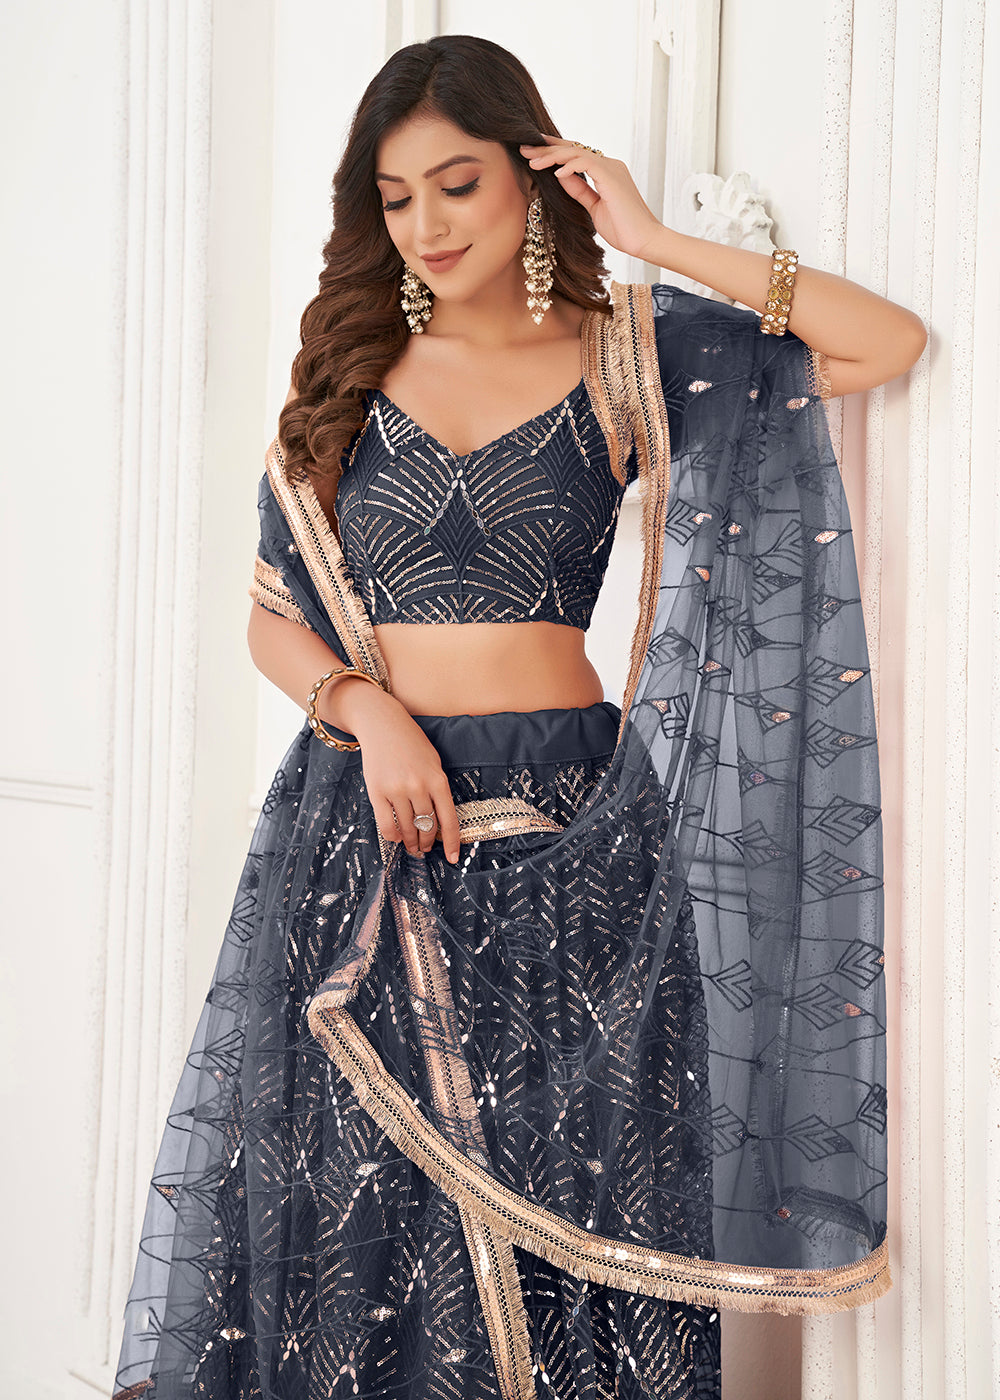 Buy Now Embroidered Net Midnight Blue Sangeet & Haldi Wedding Lehenga Choli Online in USA, UK, Canada & Worldwide at Empress Clothing.